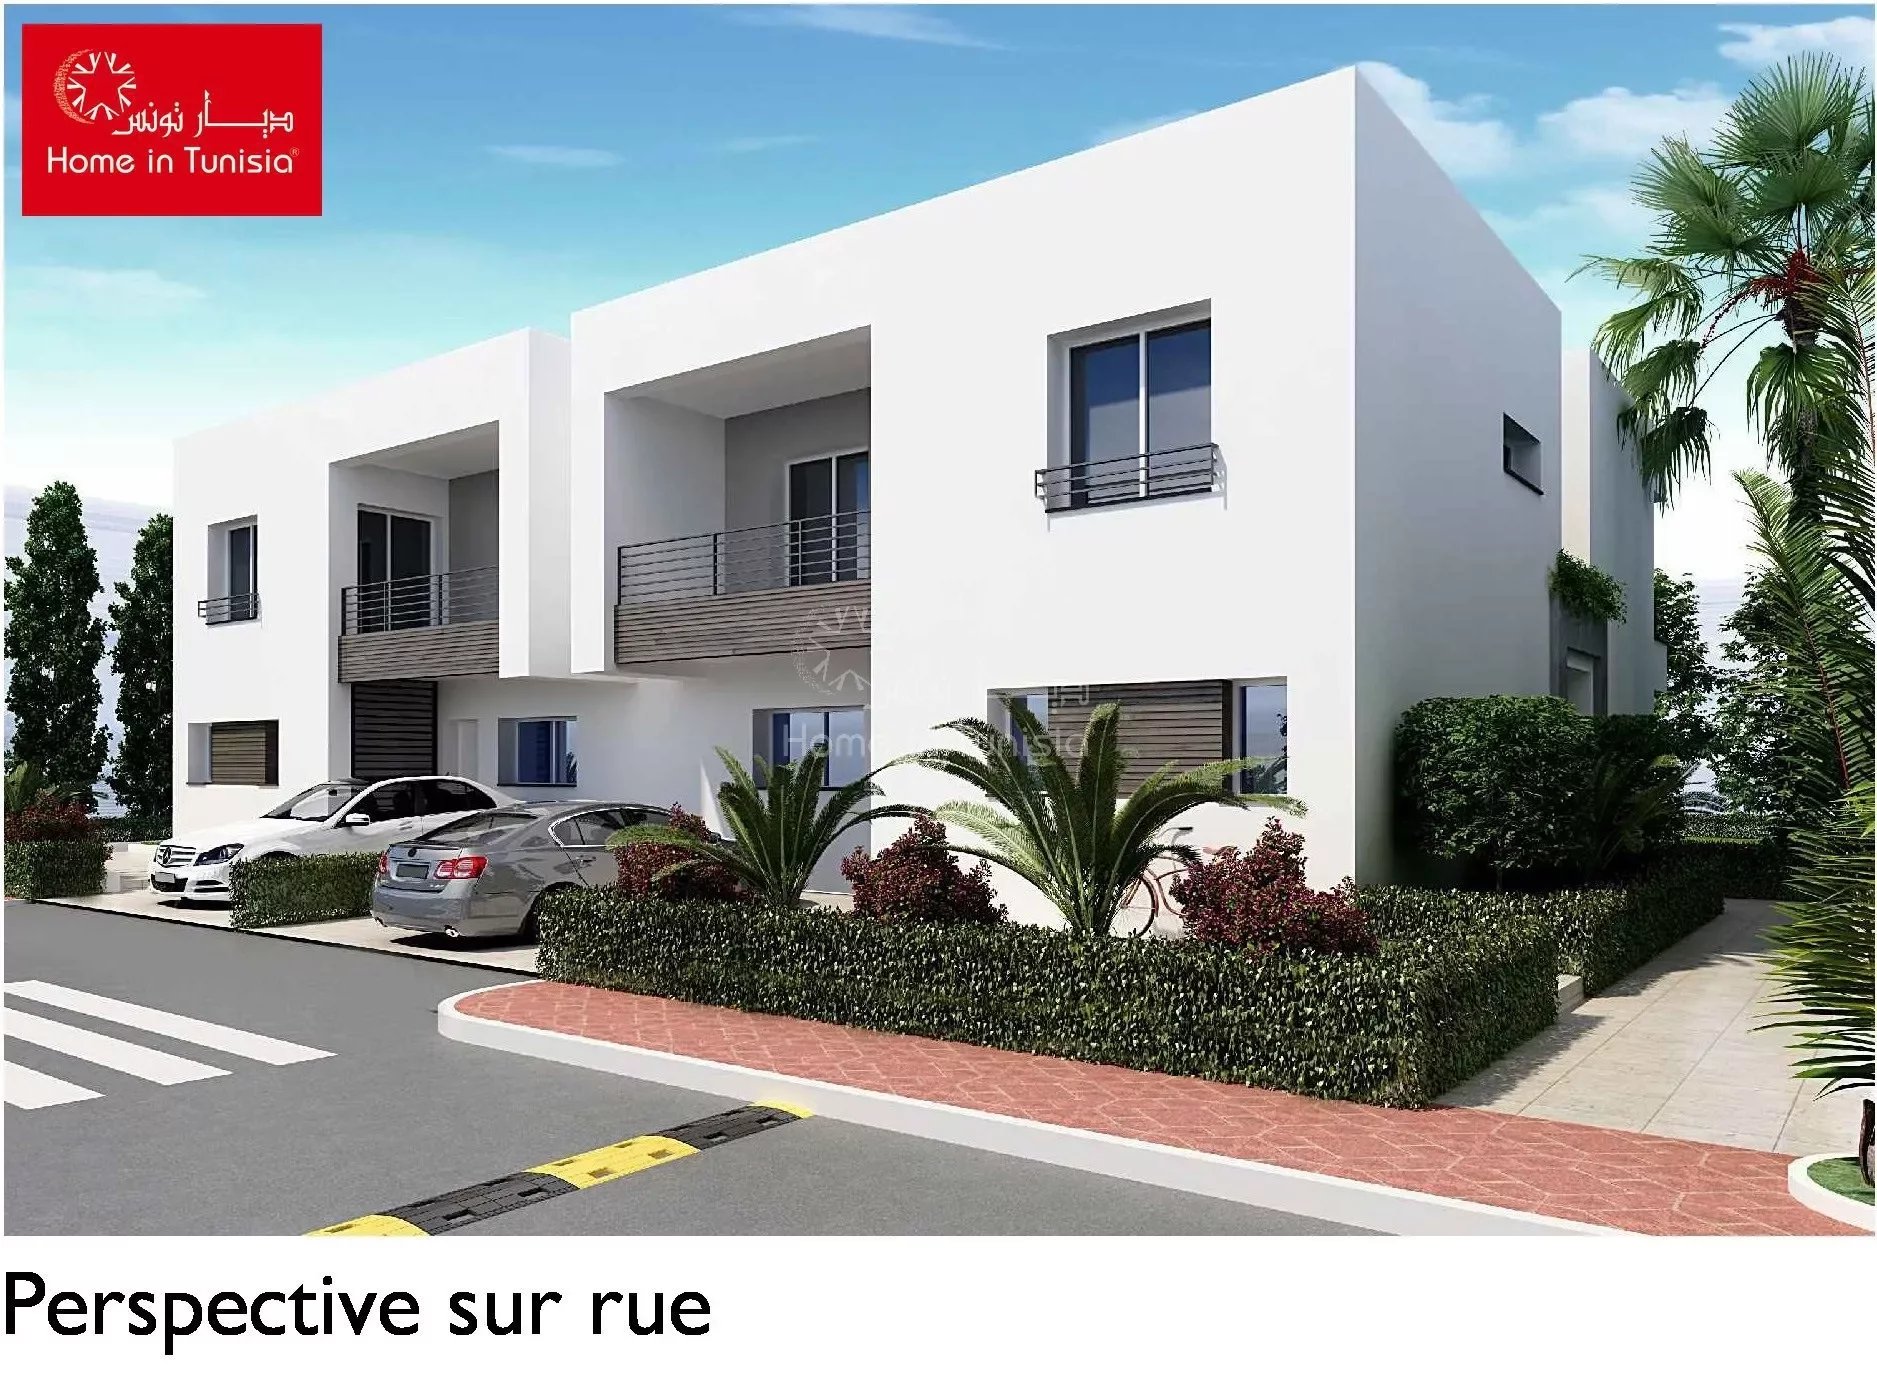 Tunis Bay residential golf villa Oceanos semi-detached 4 bedrooms terr